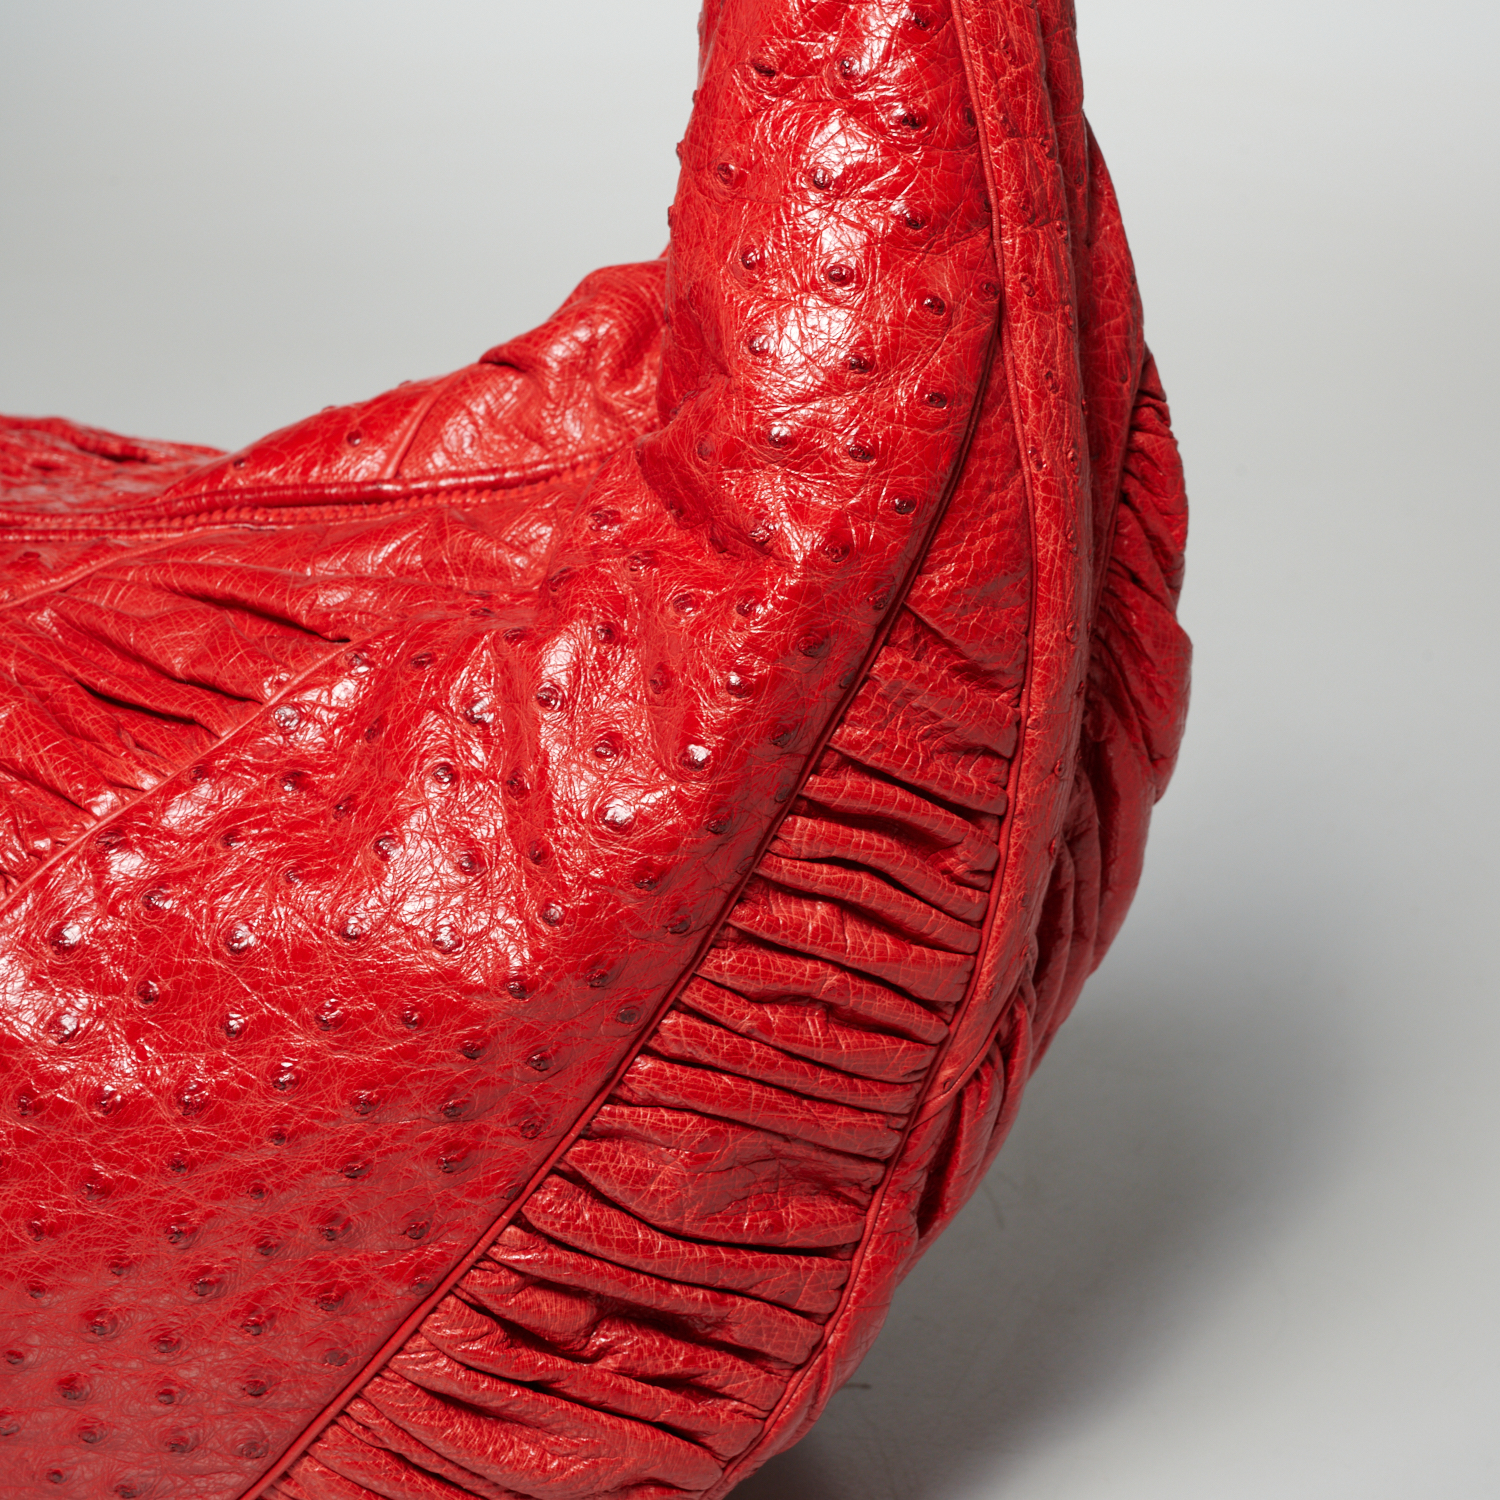 Judith Leiber red ostrich hobo handbag